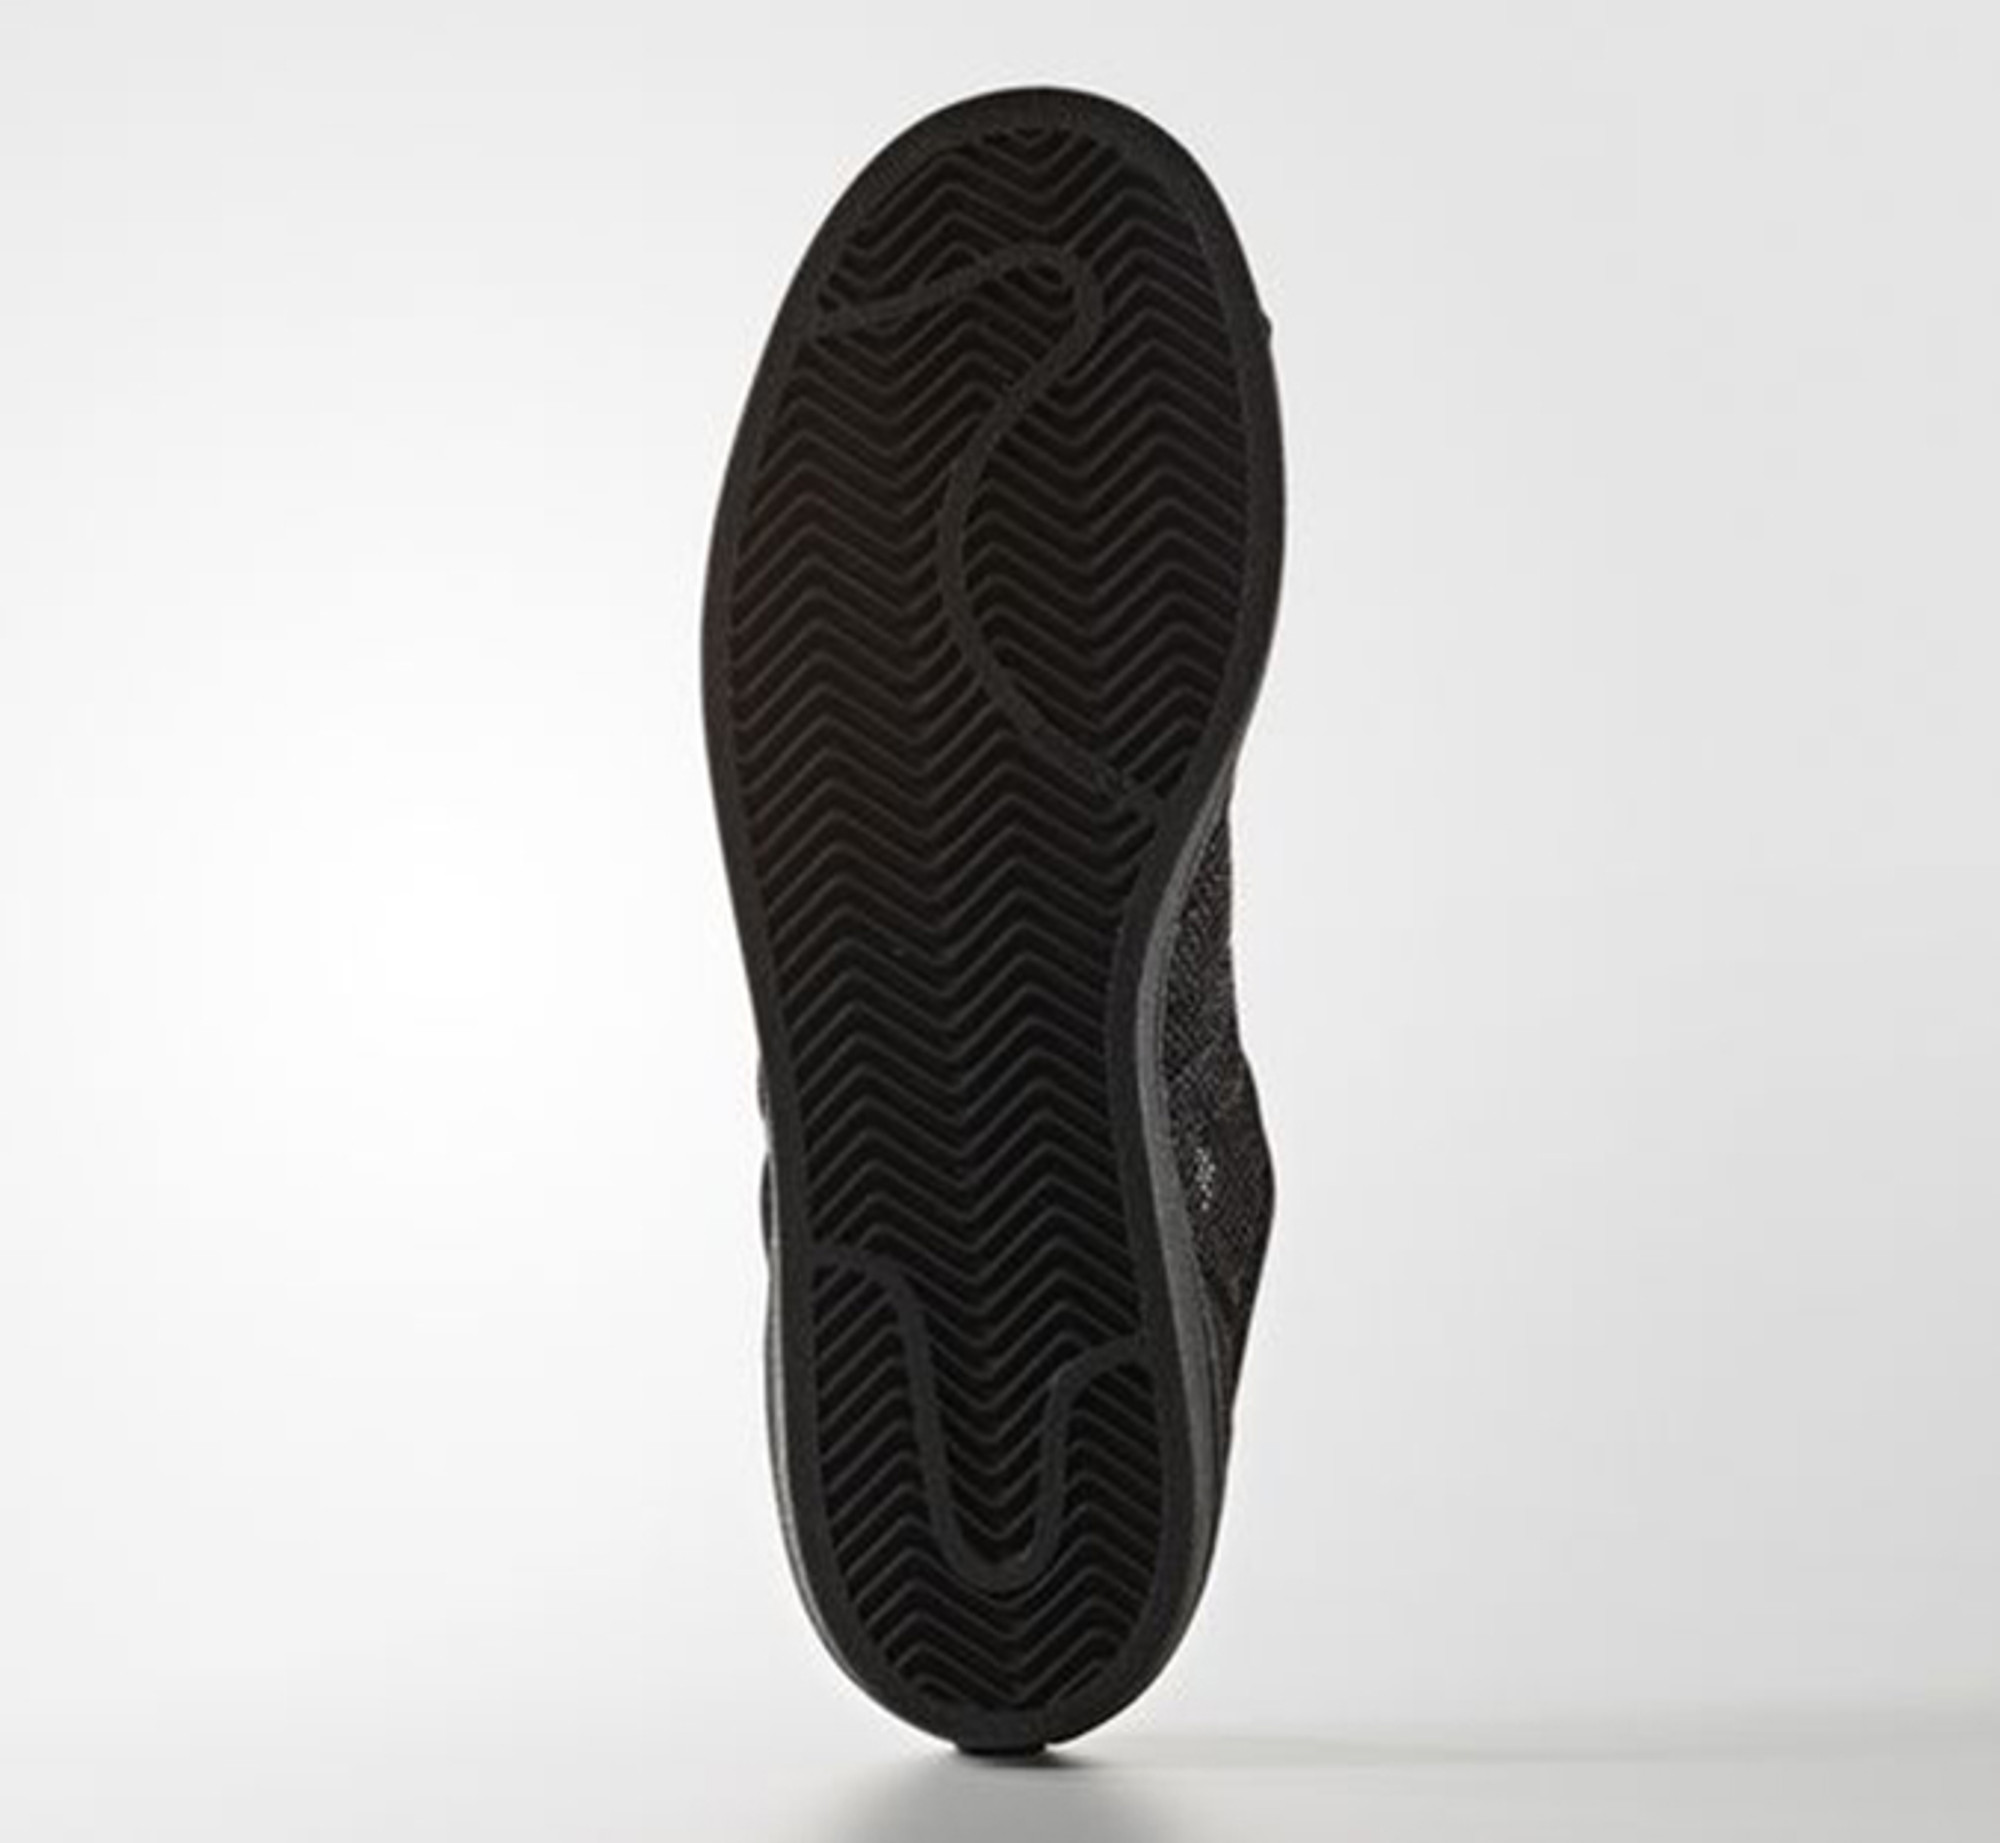 Adidas Shell Toe Athletic Shoes